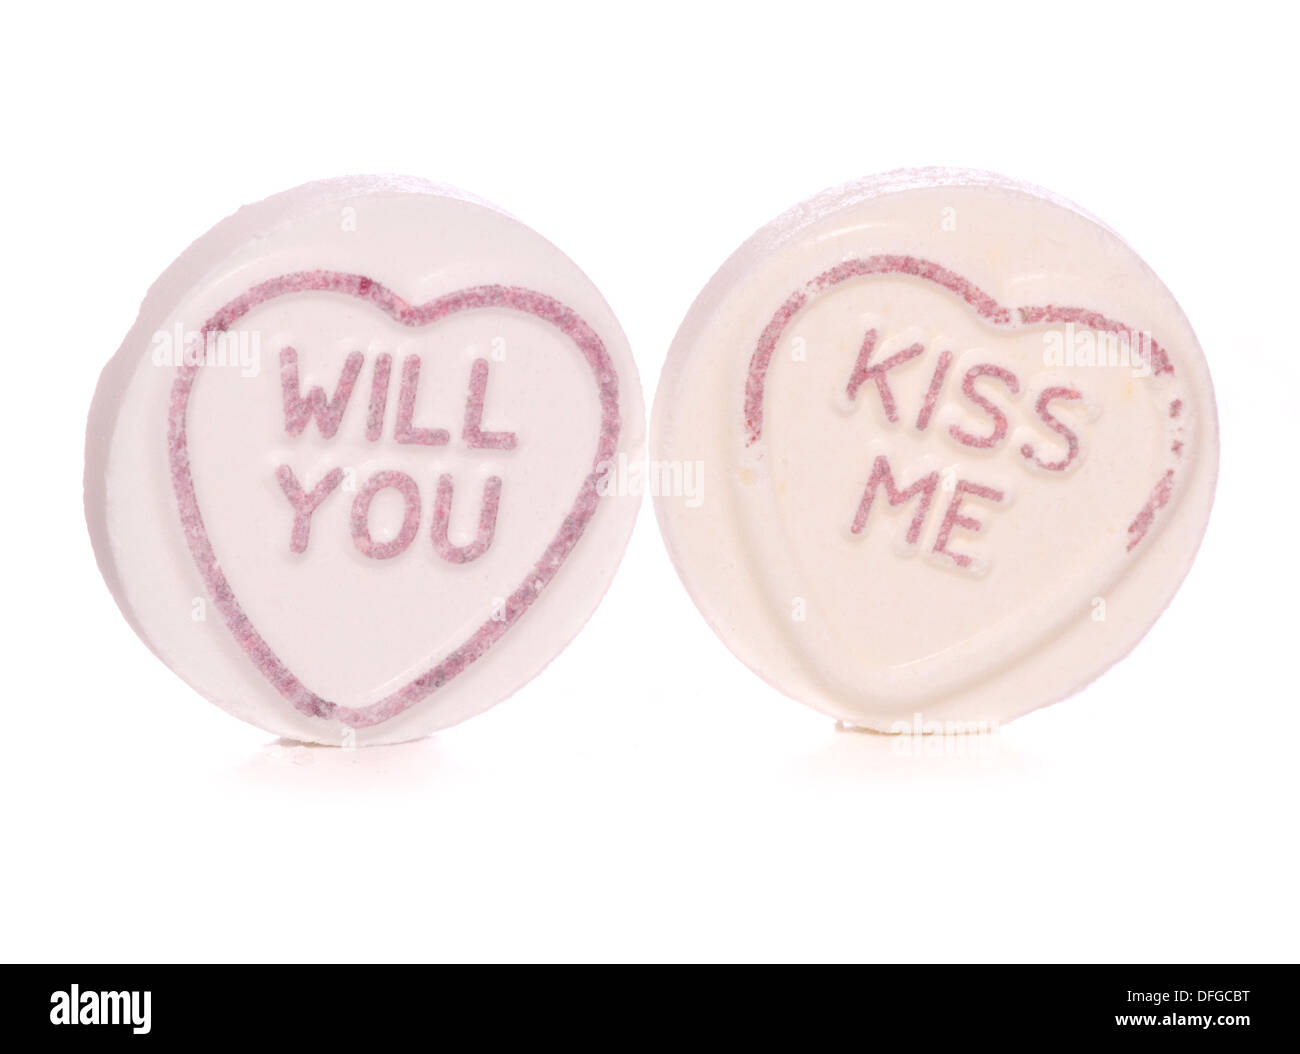 Will you kiss me love hearts studio cutout Stock Photo